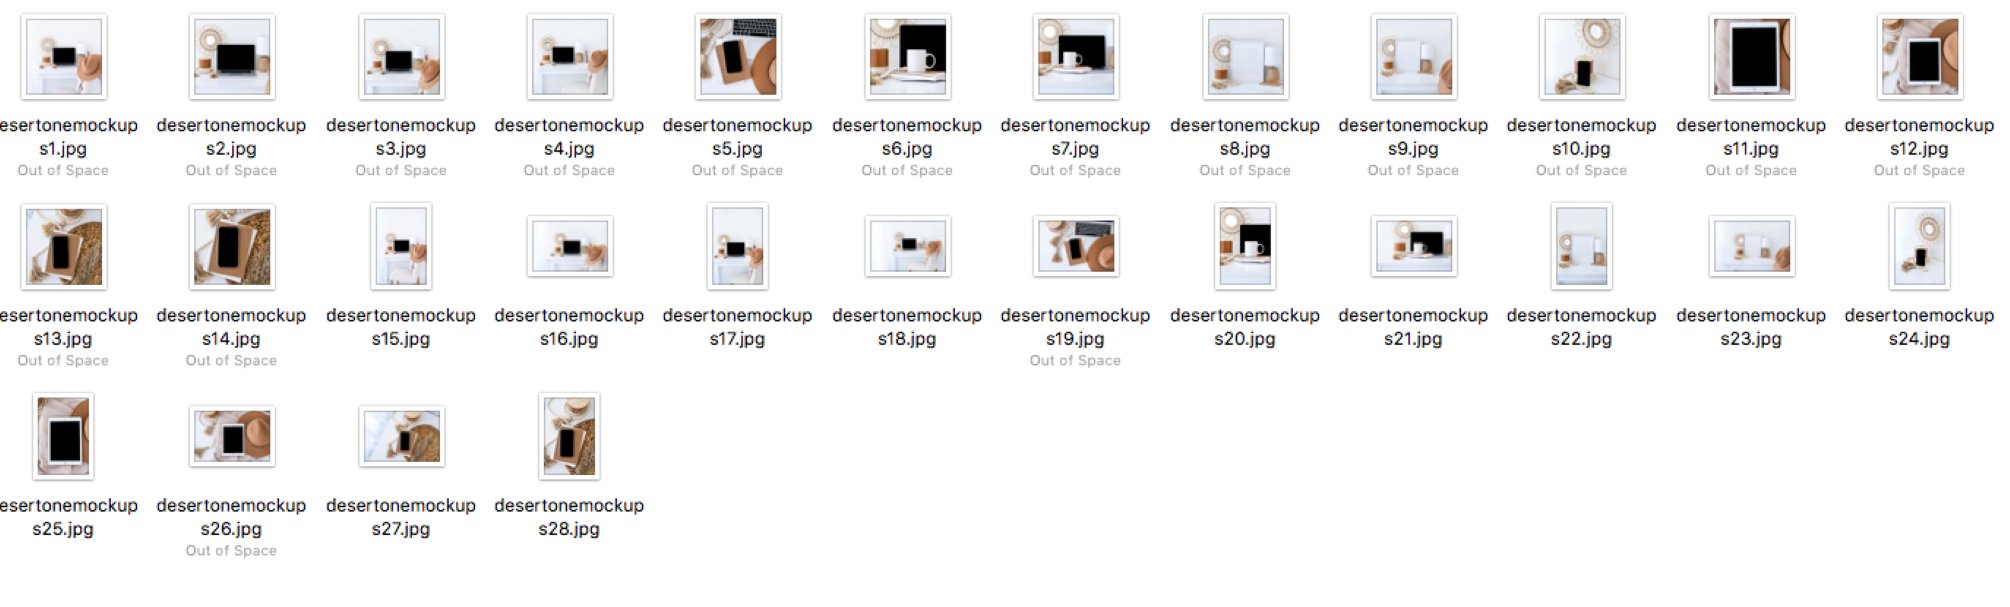 Desert Tones Mockups (15+ Images) preview image.